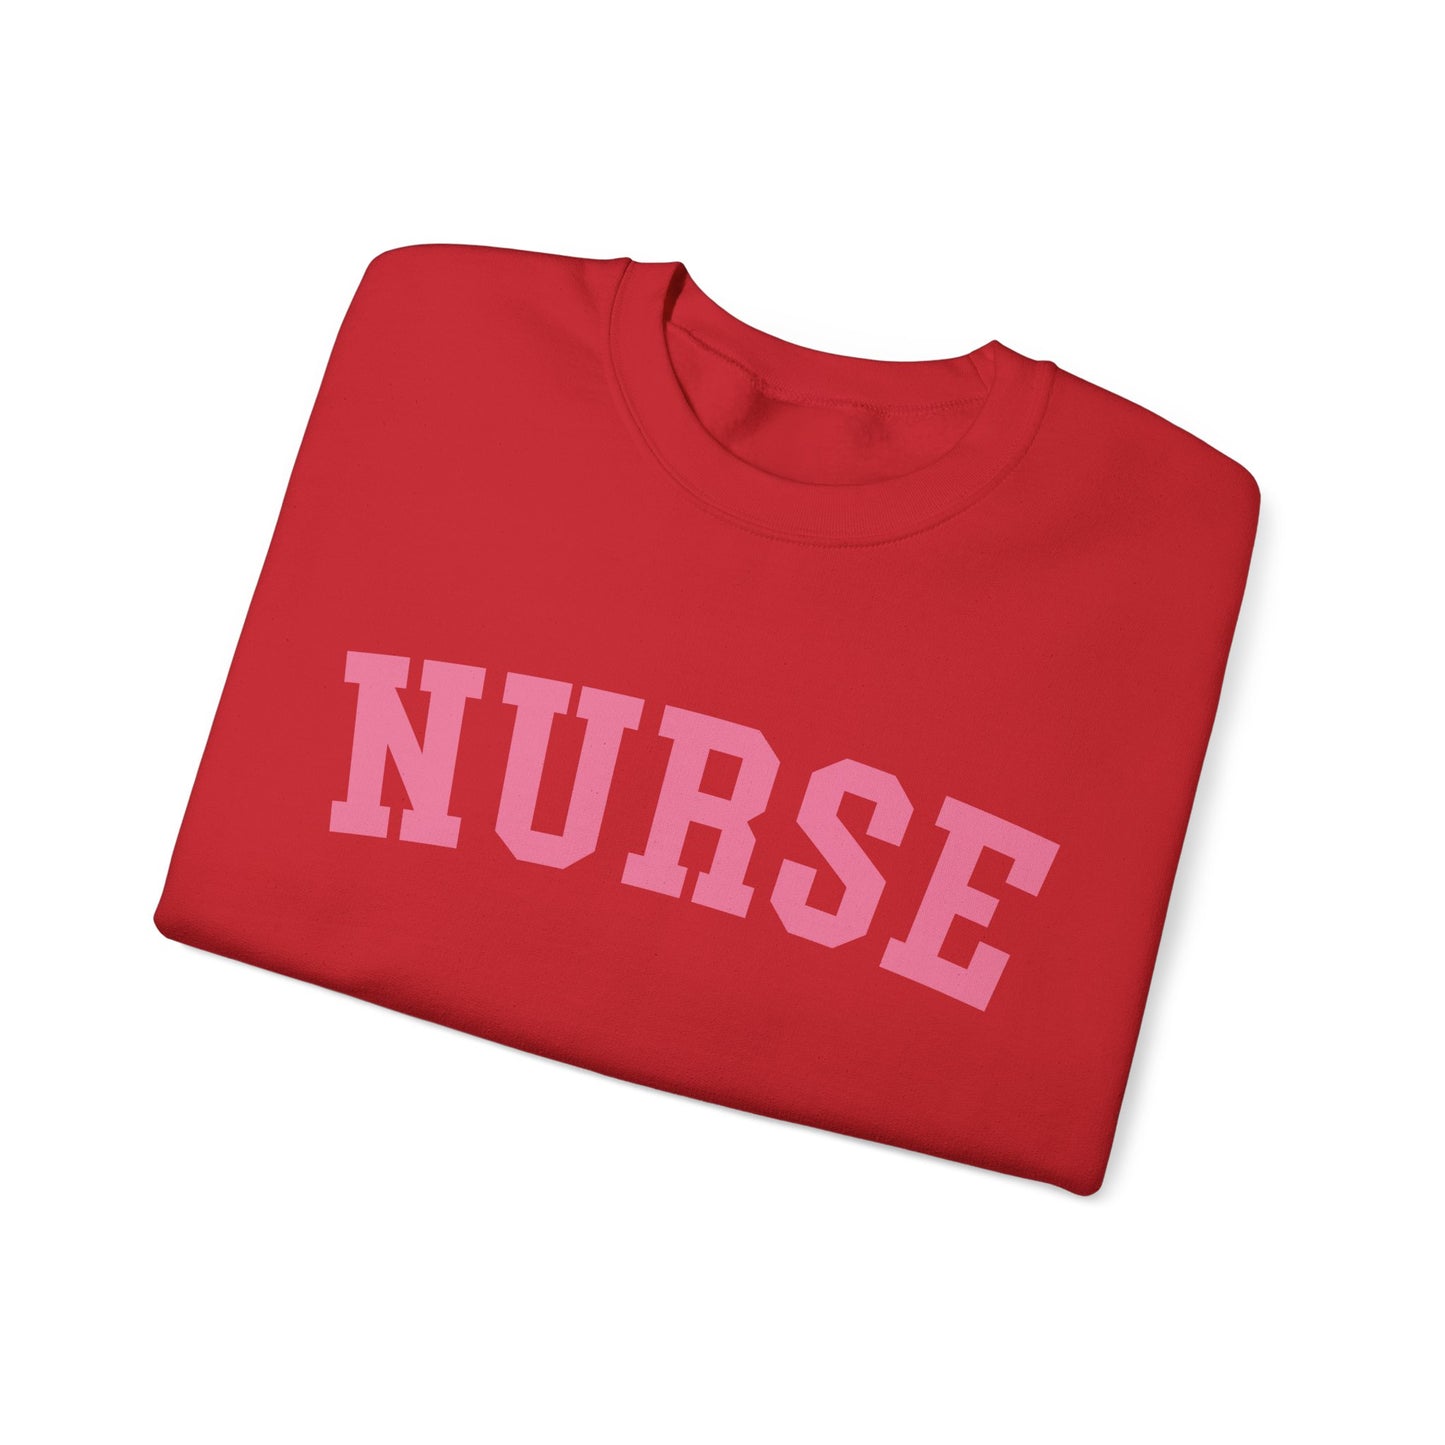 Nurse Crewneck Sweatshirt, Perfect Cozy Sweater For Nurse Week, Students, Graduates, Registered Nurse, ER, Pediatric, Oncology, NICU, Nurse Retirement